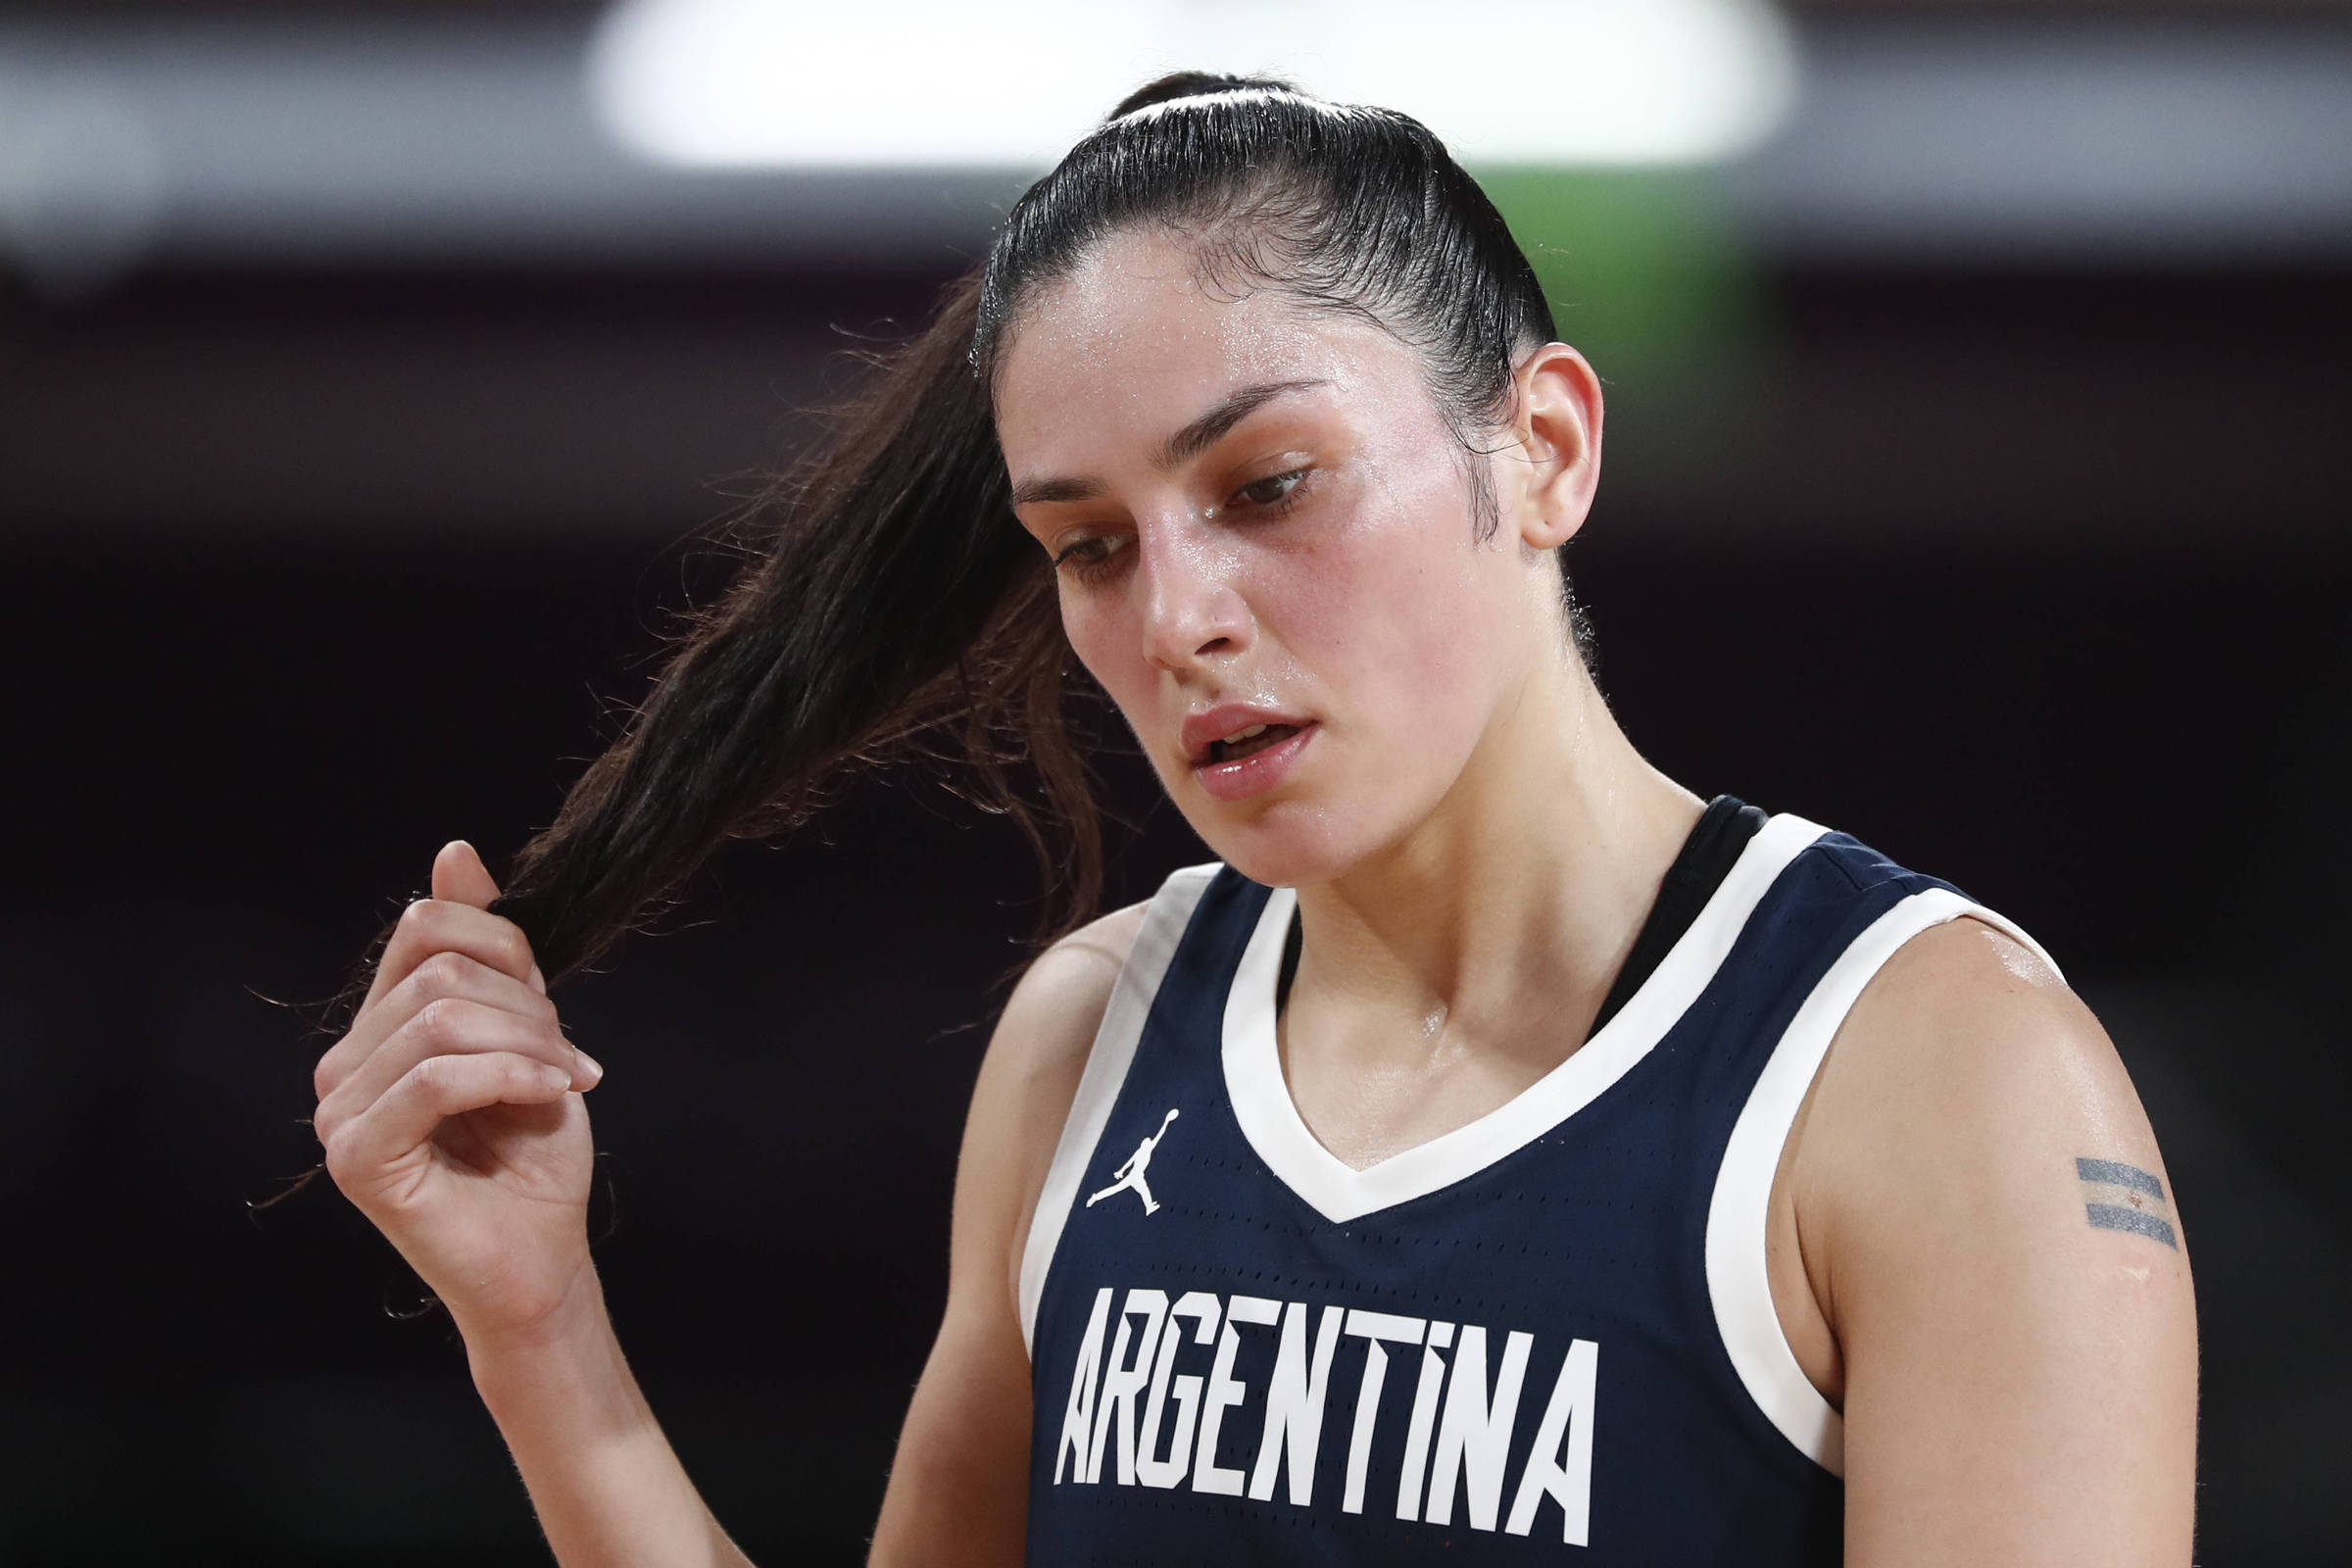 Argentina está fora da AmeriCup de basquete por casos de Covid, olimpíadas